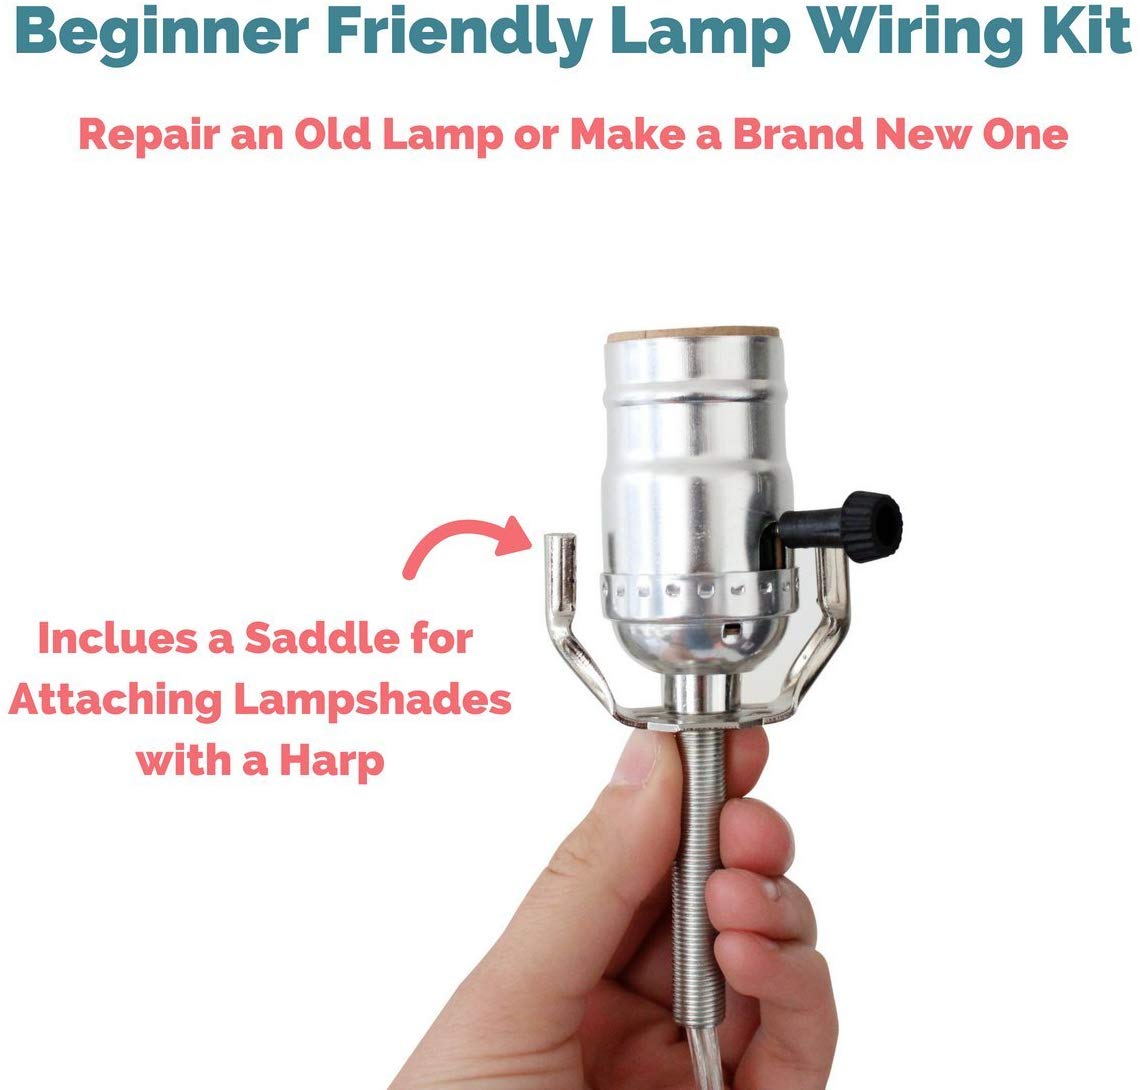 Lamp Wiring Kit - Beginner Friendly Lamp Making Kit For Making and